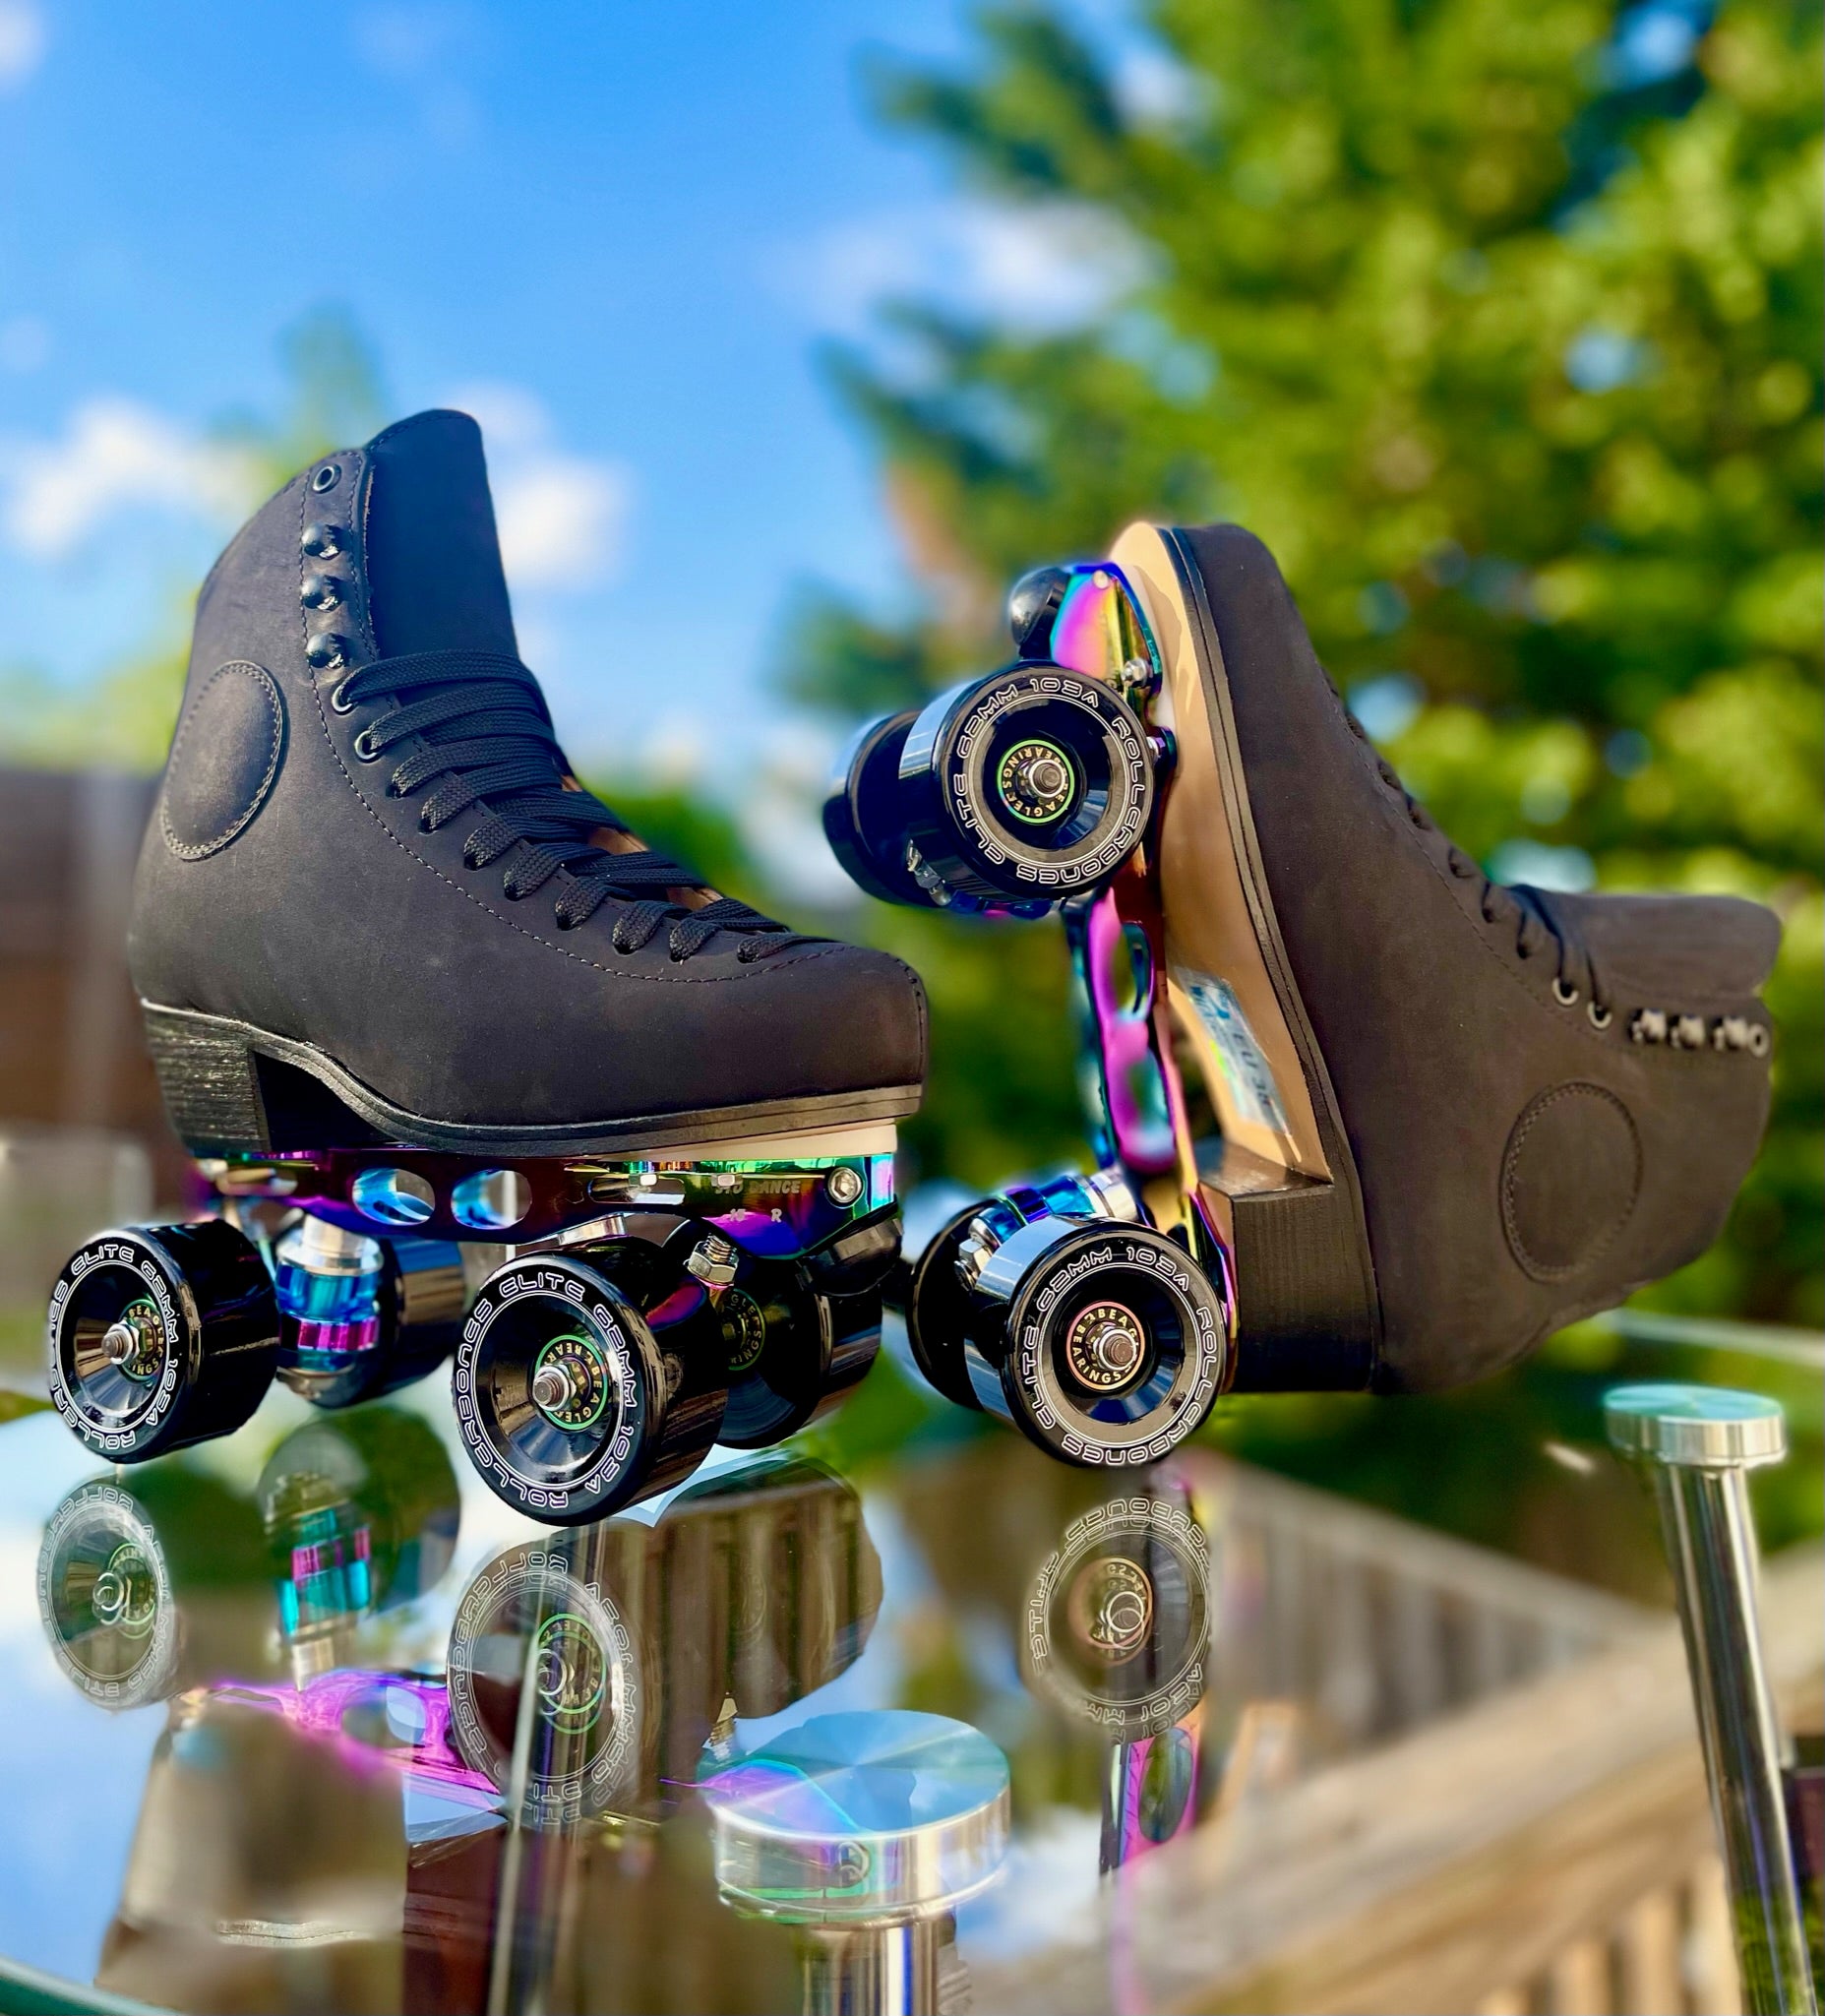 Load video: A video slideshow of various roller skates